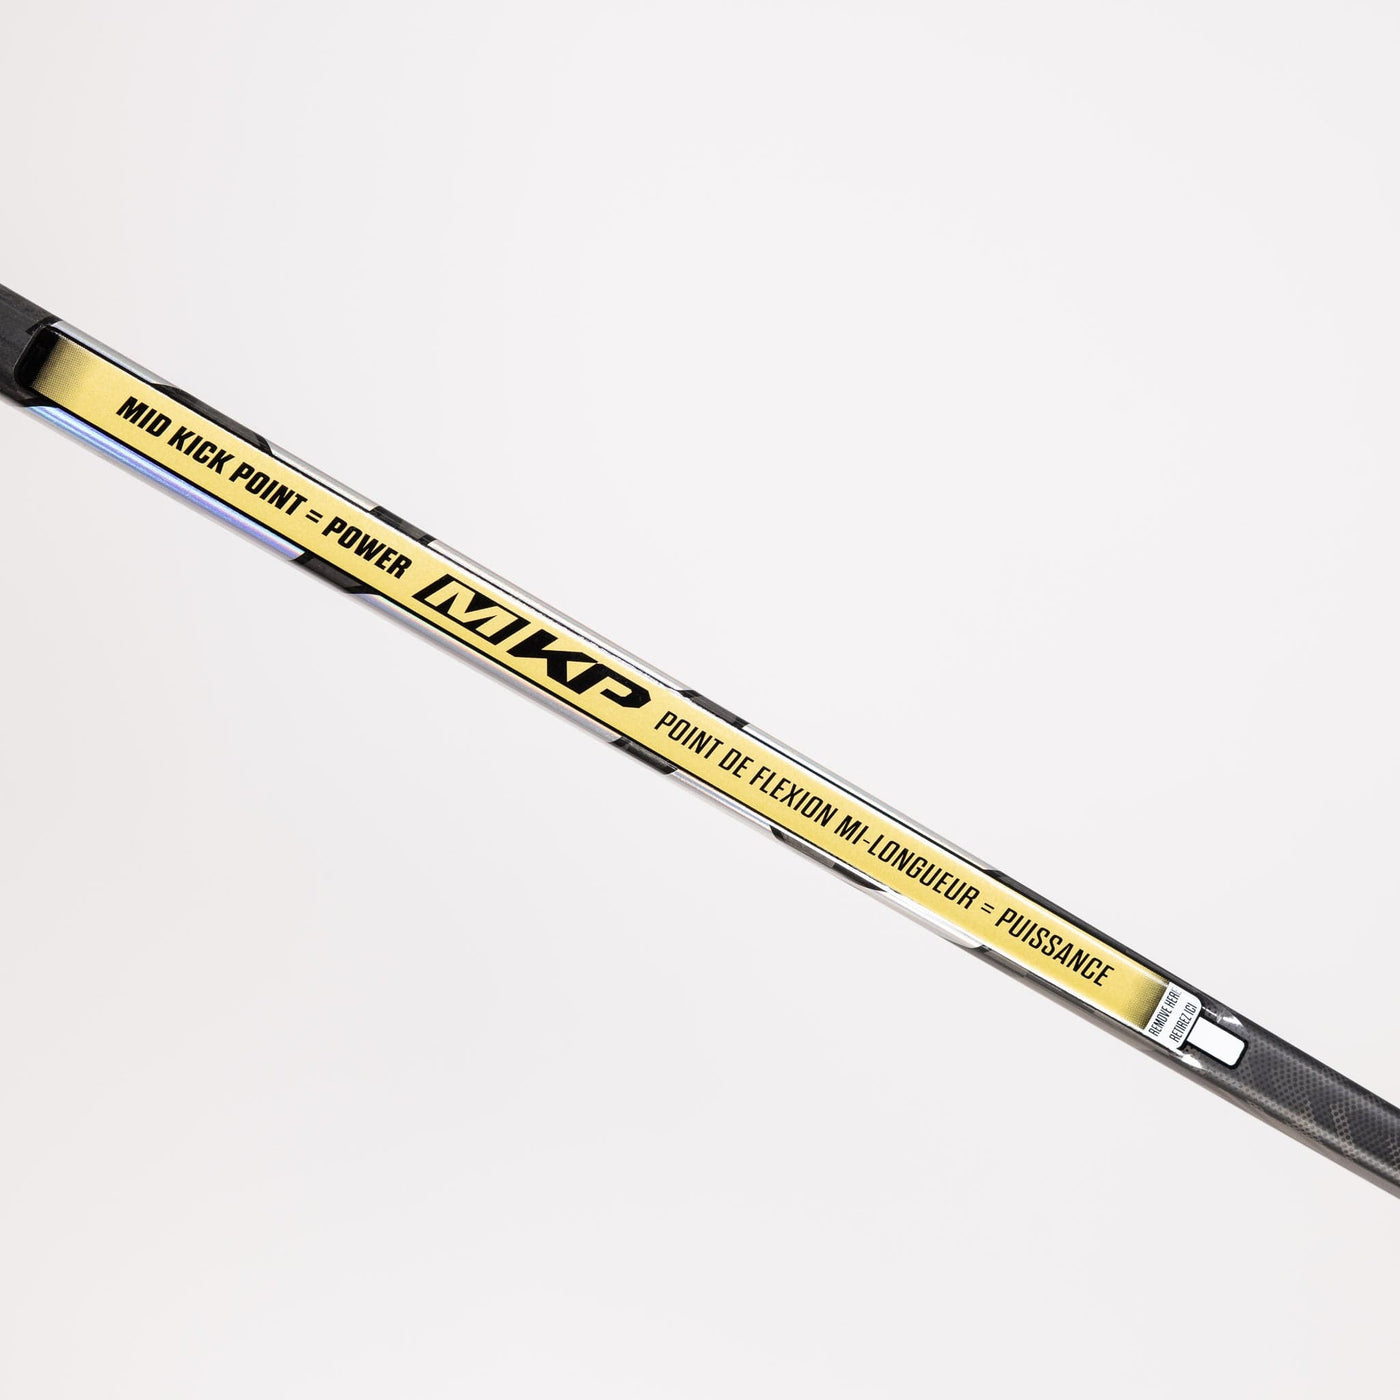 CCM Tacks AS6 Pro Senior Hockey Stick - The Hockey Shop Source For Sports